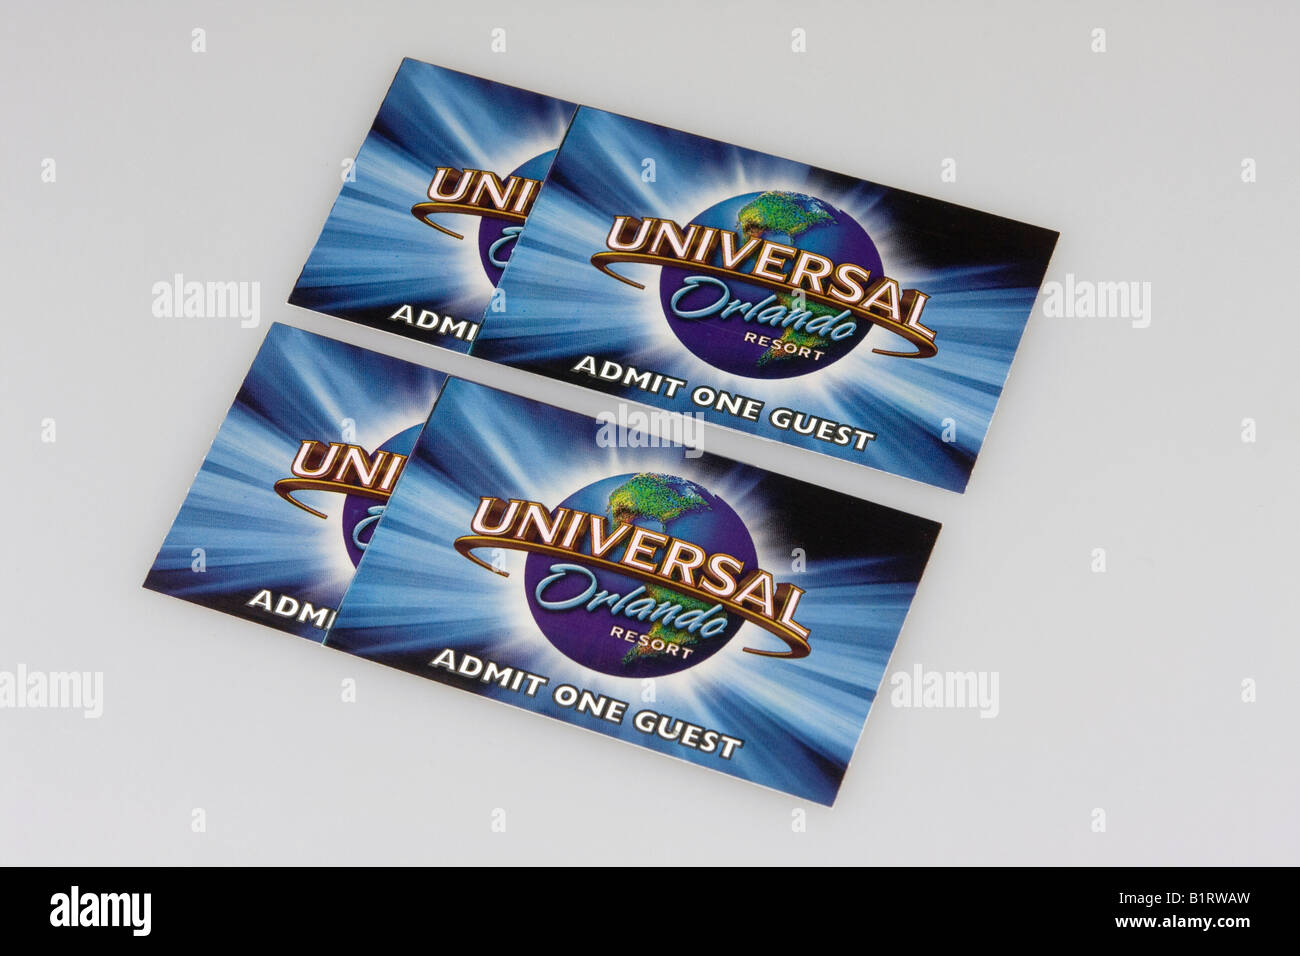 Tickets to Universal Studios in Orlando, Florida, USA Stock Photo - Alamy